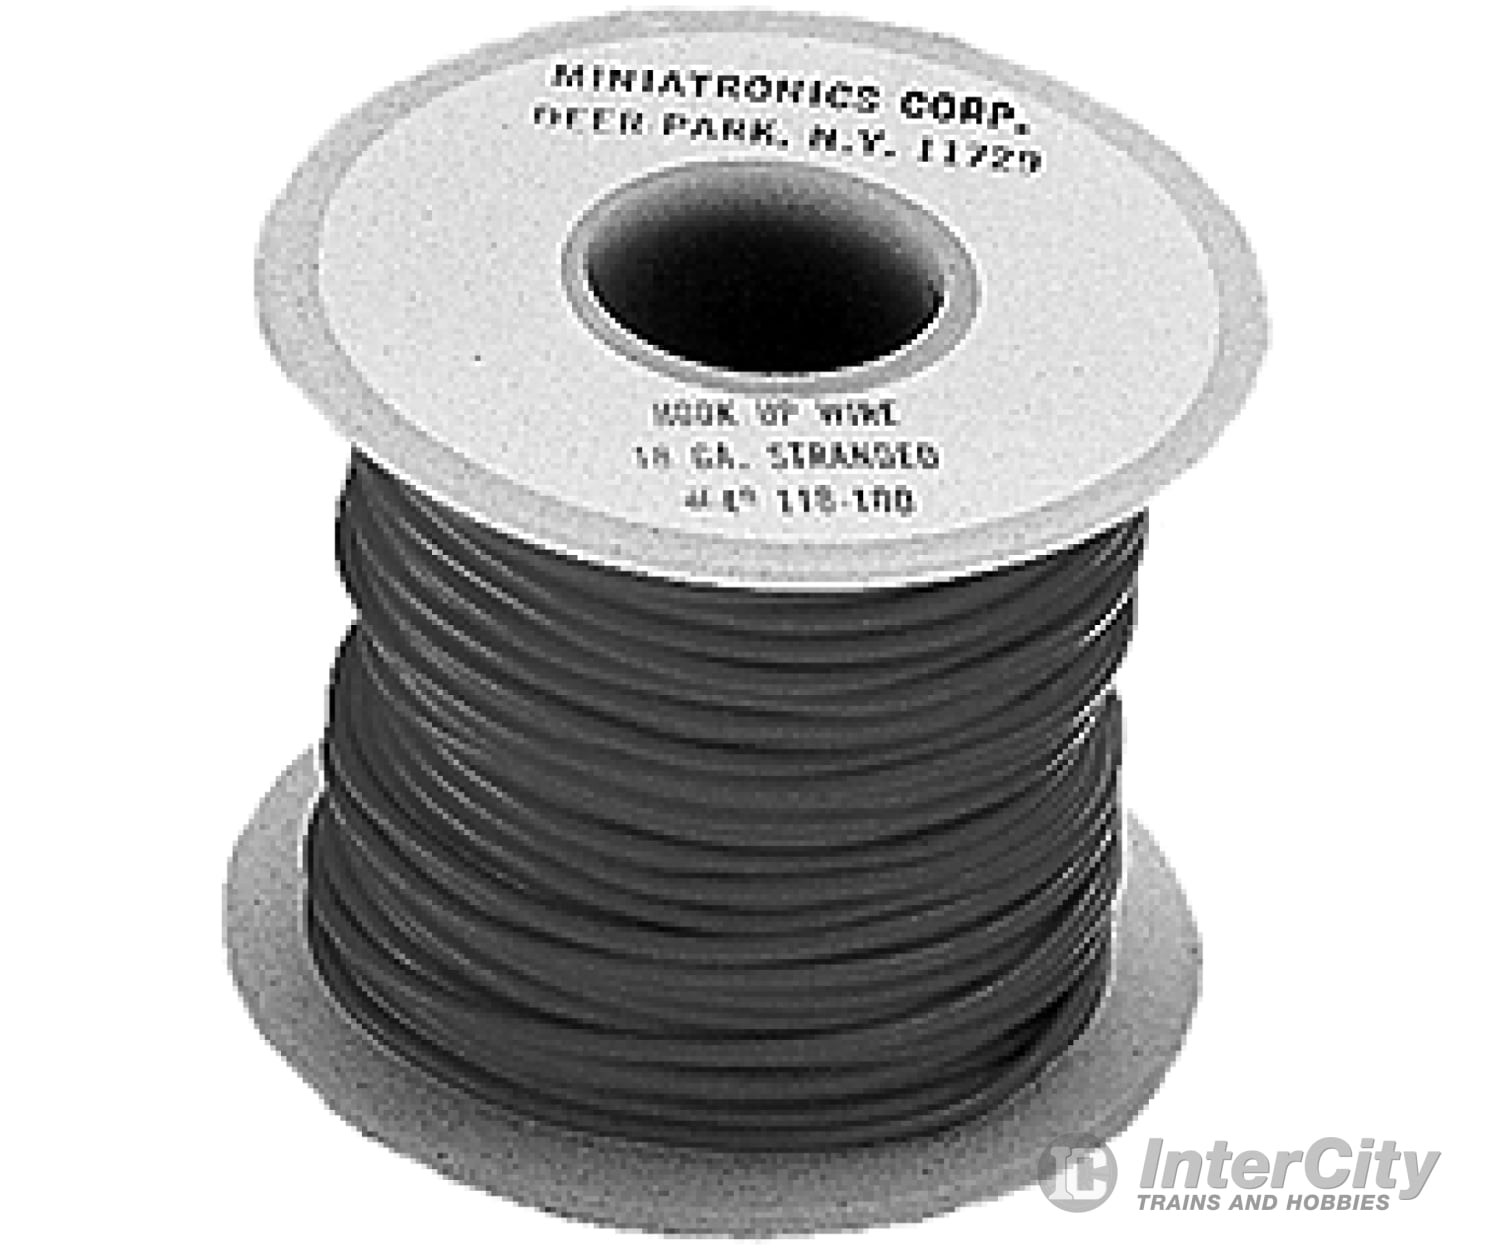 Miniatronics Corp. 4818001 18 Gauge Stranded Single Conductor Wire - 1